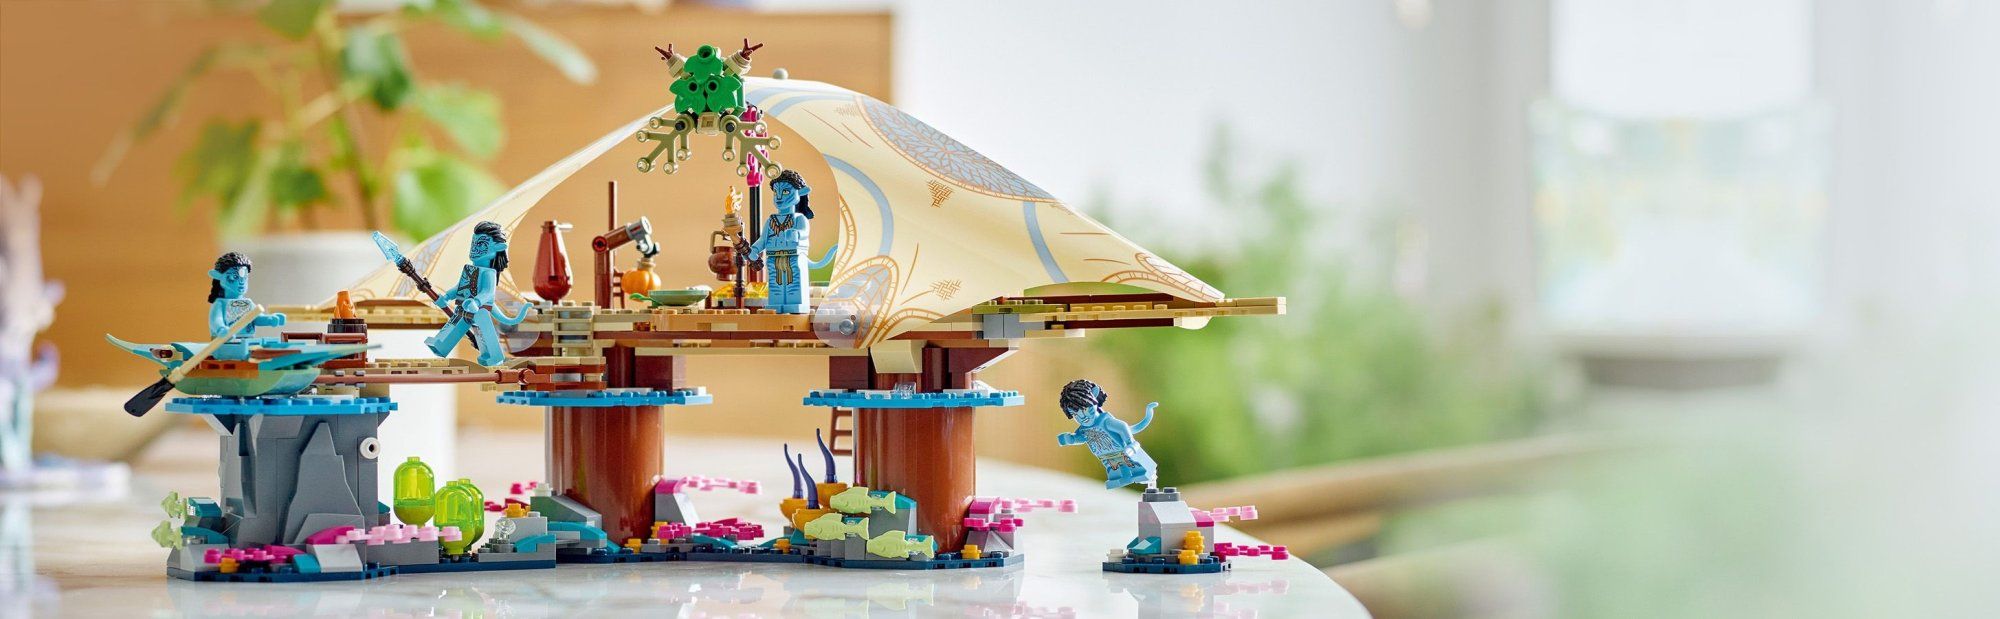 LEGO Avatar 75578 Dům kmene Metkayina na útesu